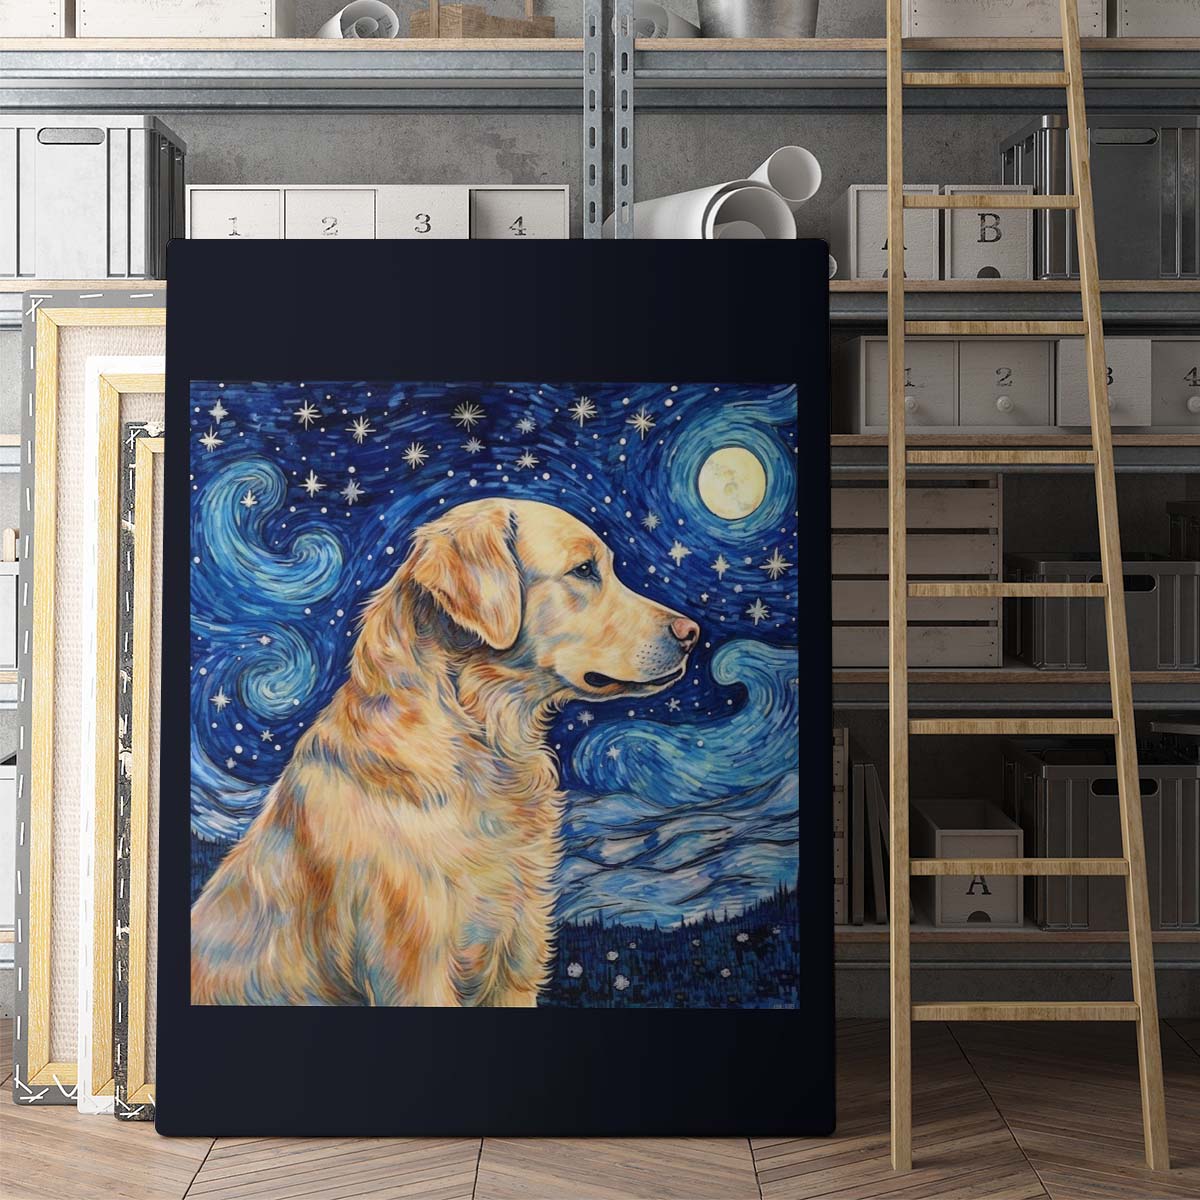 Drawings Golden Retriever Dog 02 Van Goh Style Vintage Framed Canvas Prints Wall Art Hanging Home Decor